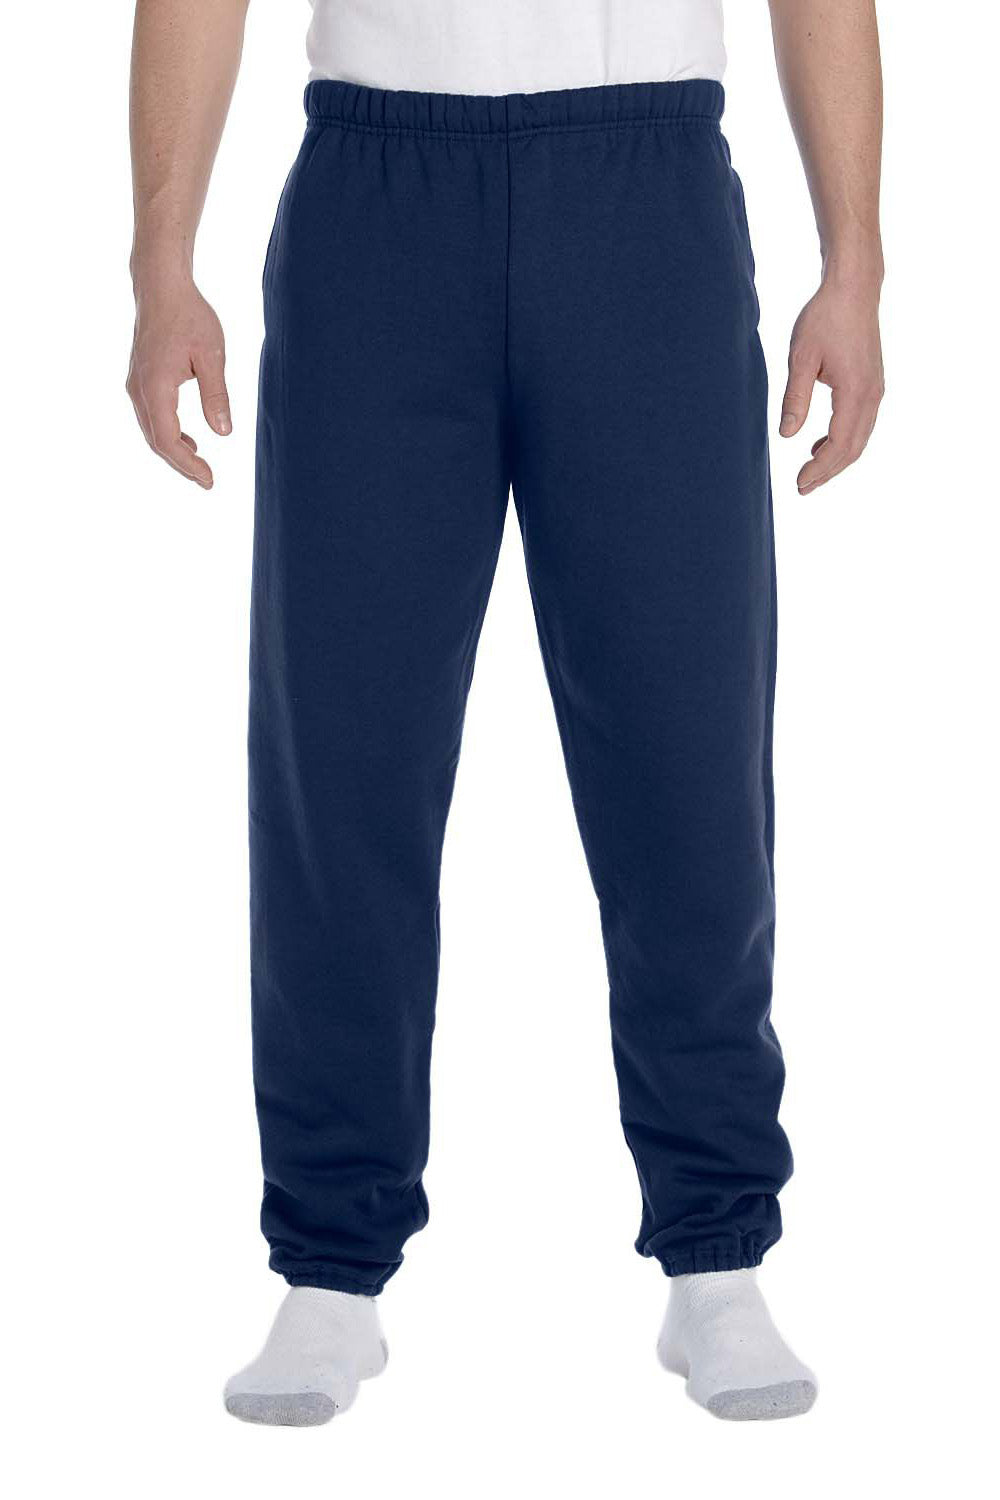 Jerzees 4850P Mens Super Sweats NuBlend Fleece Sweatpants w/ Pockets Navy Blue Front